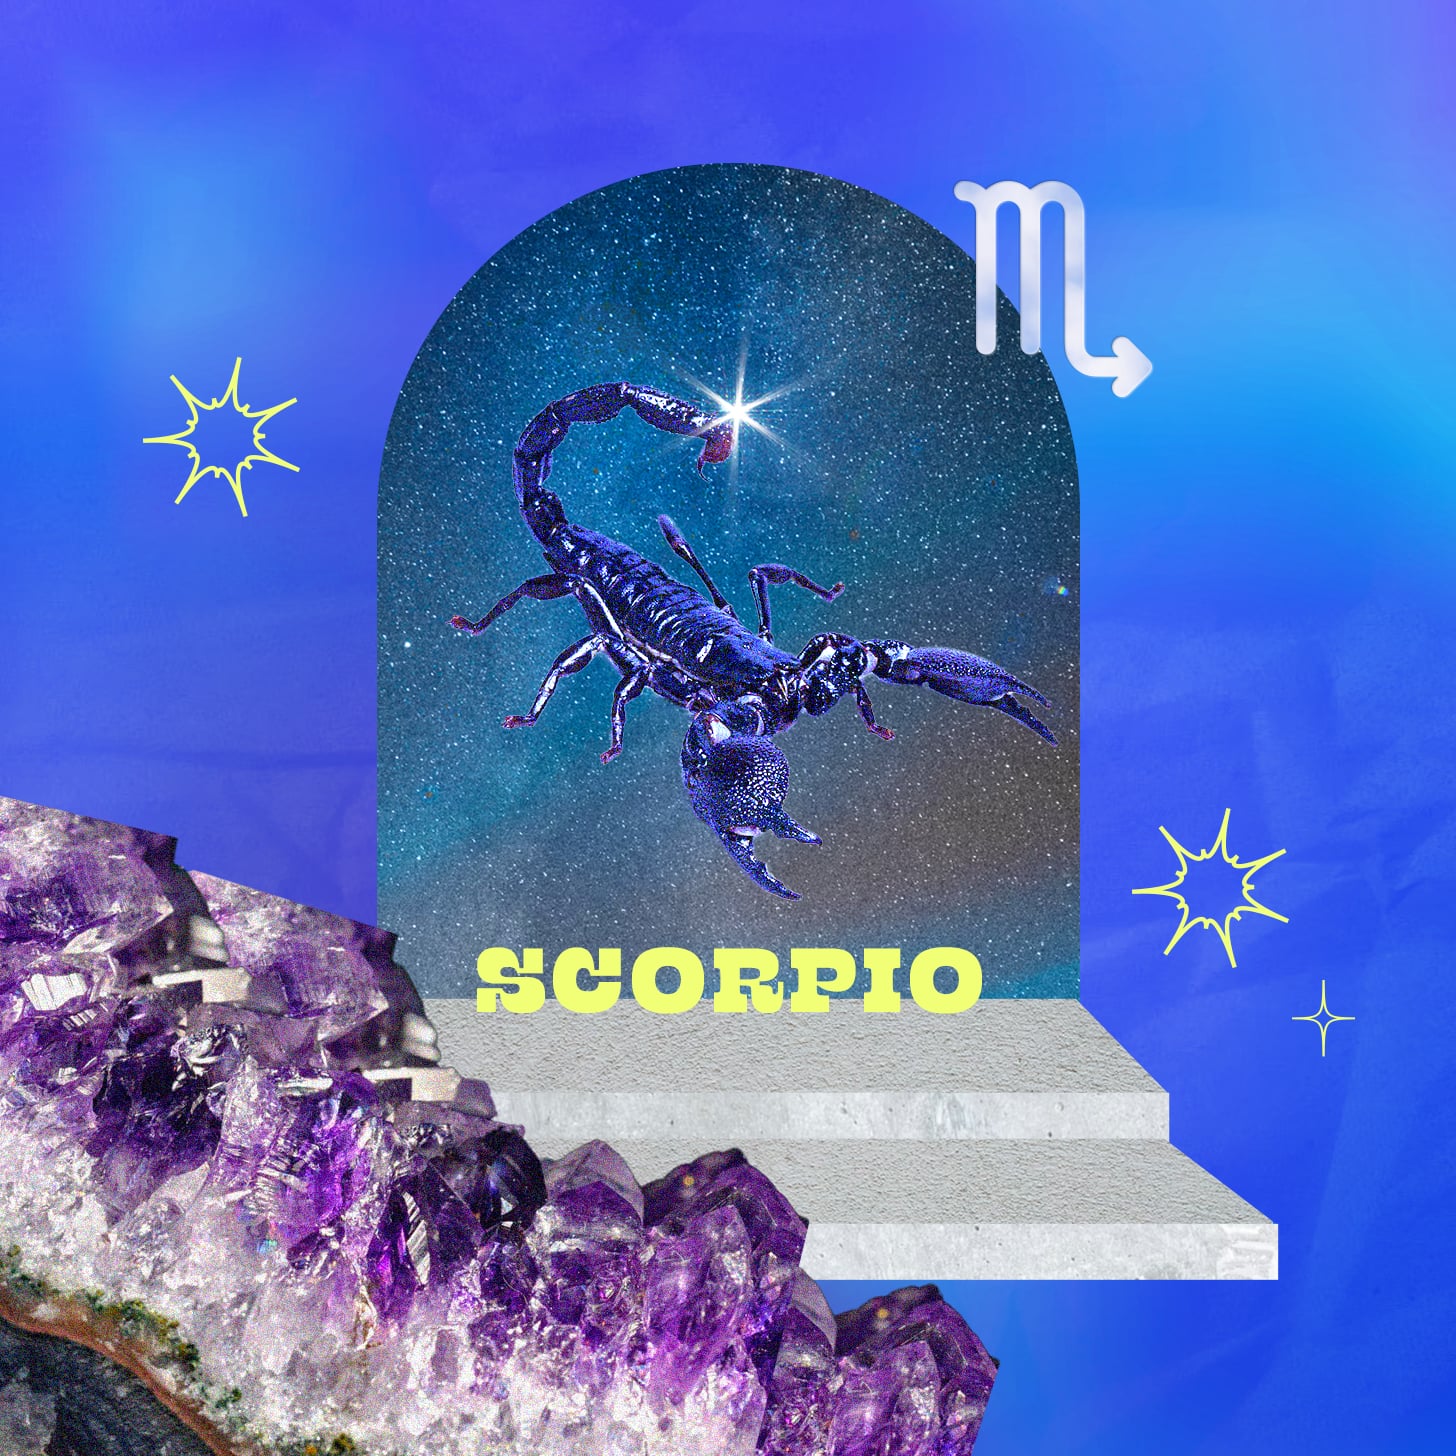 Scorpio weekly horoscope for November 20, 2022